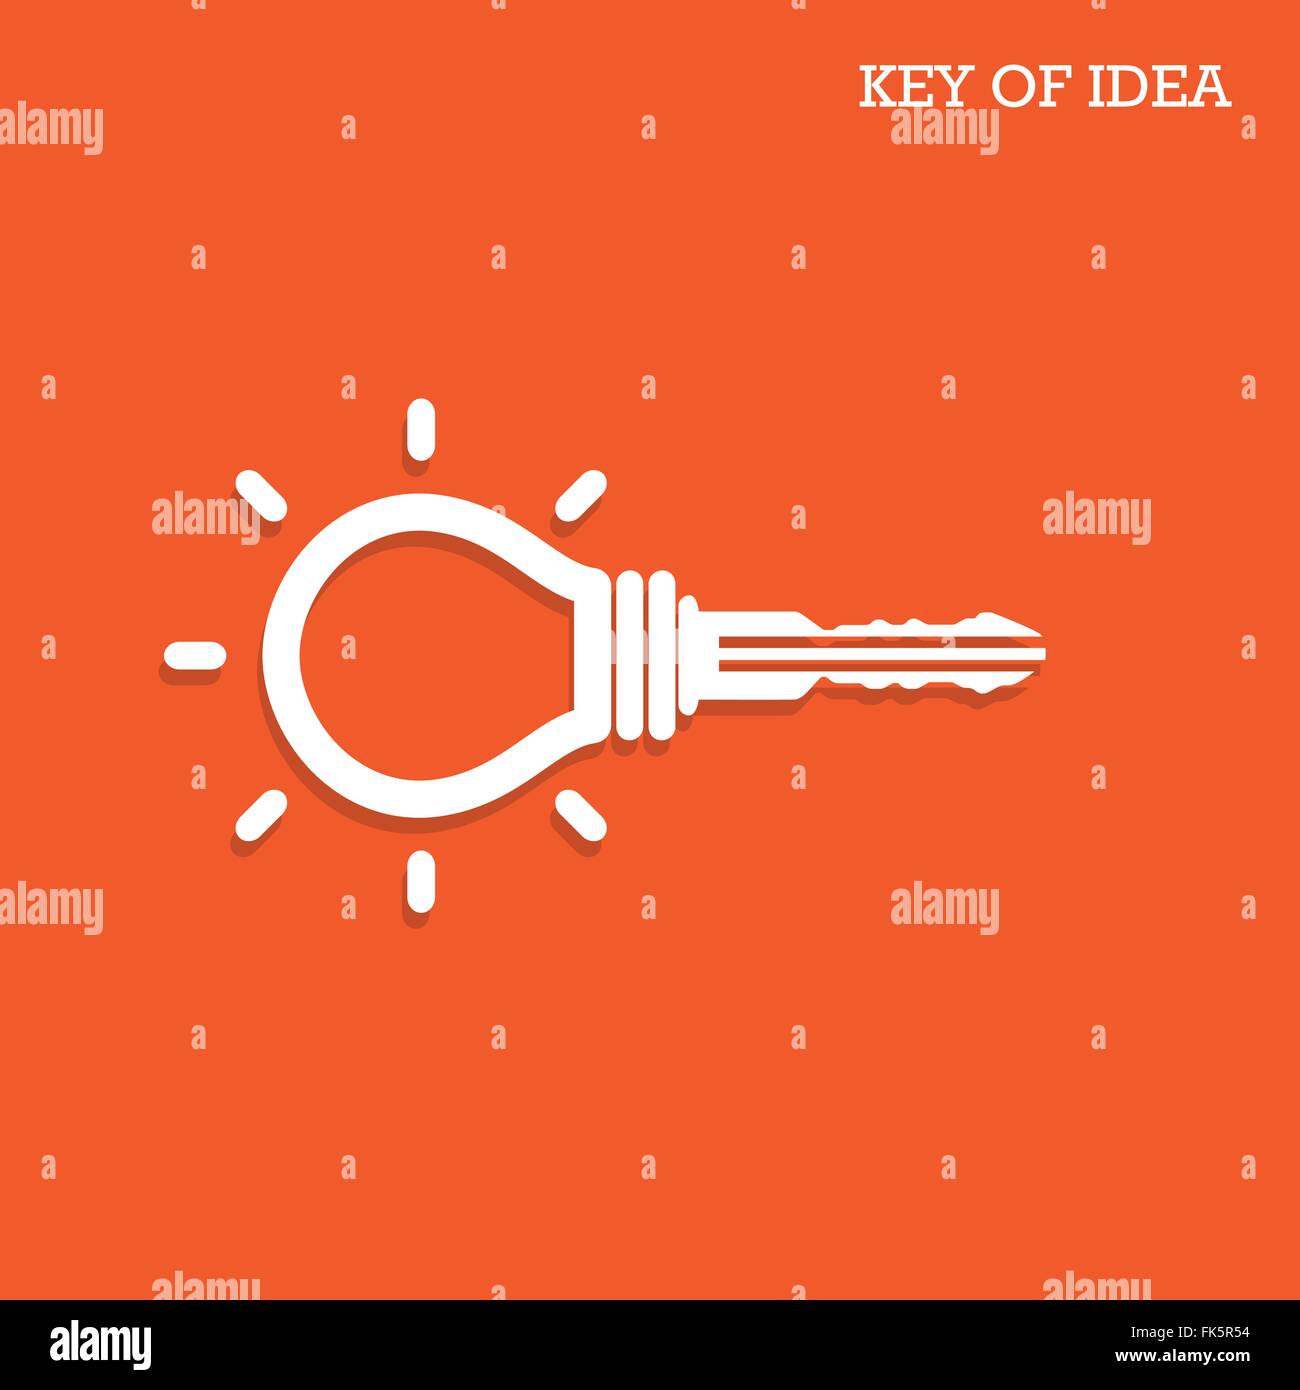 Creative light bulb idea concept with padlock symbol. Key of idea. Business ideas.Vector illustration. Stock Vector